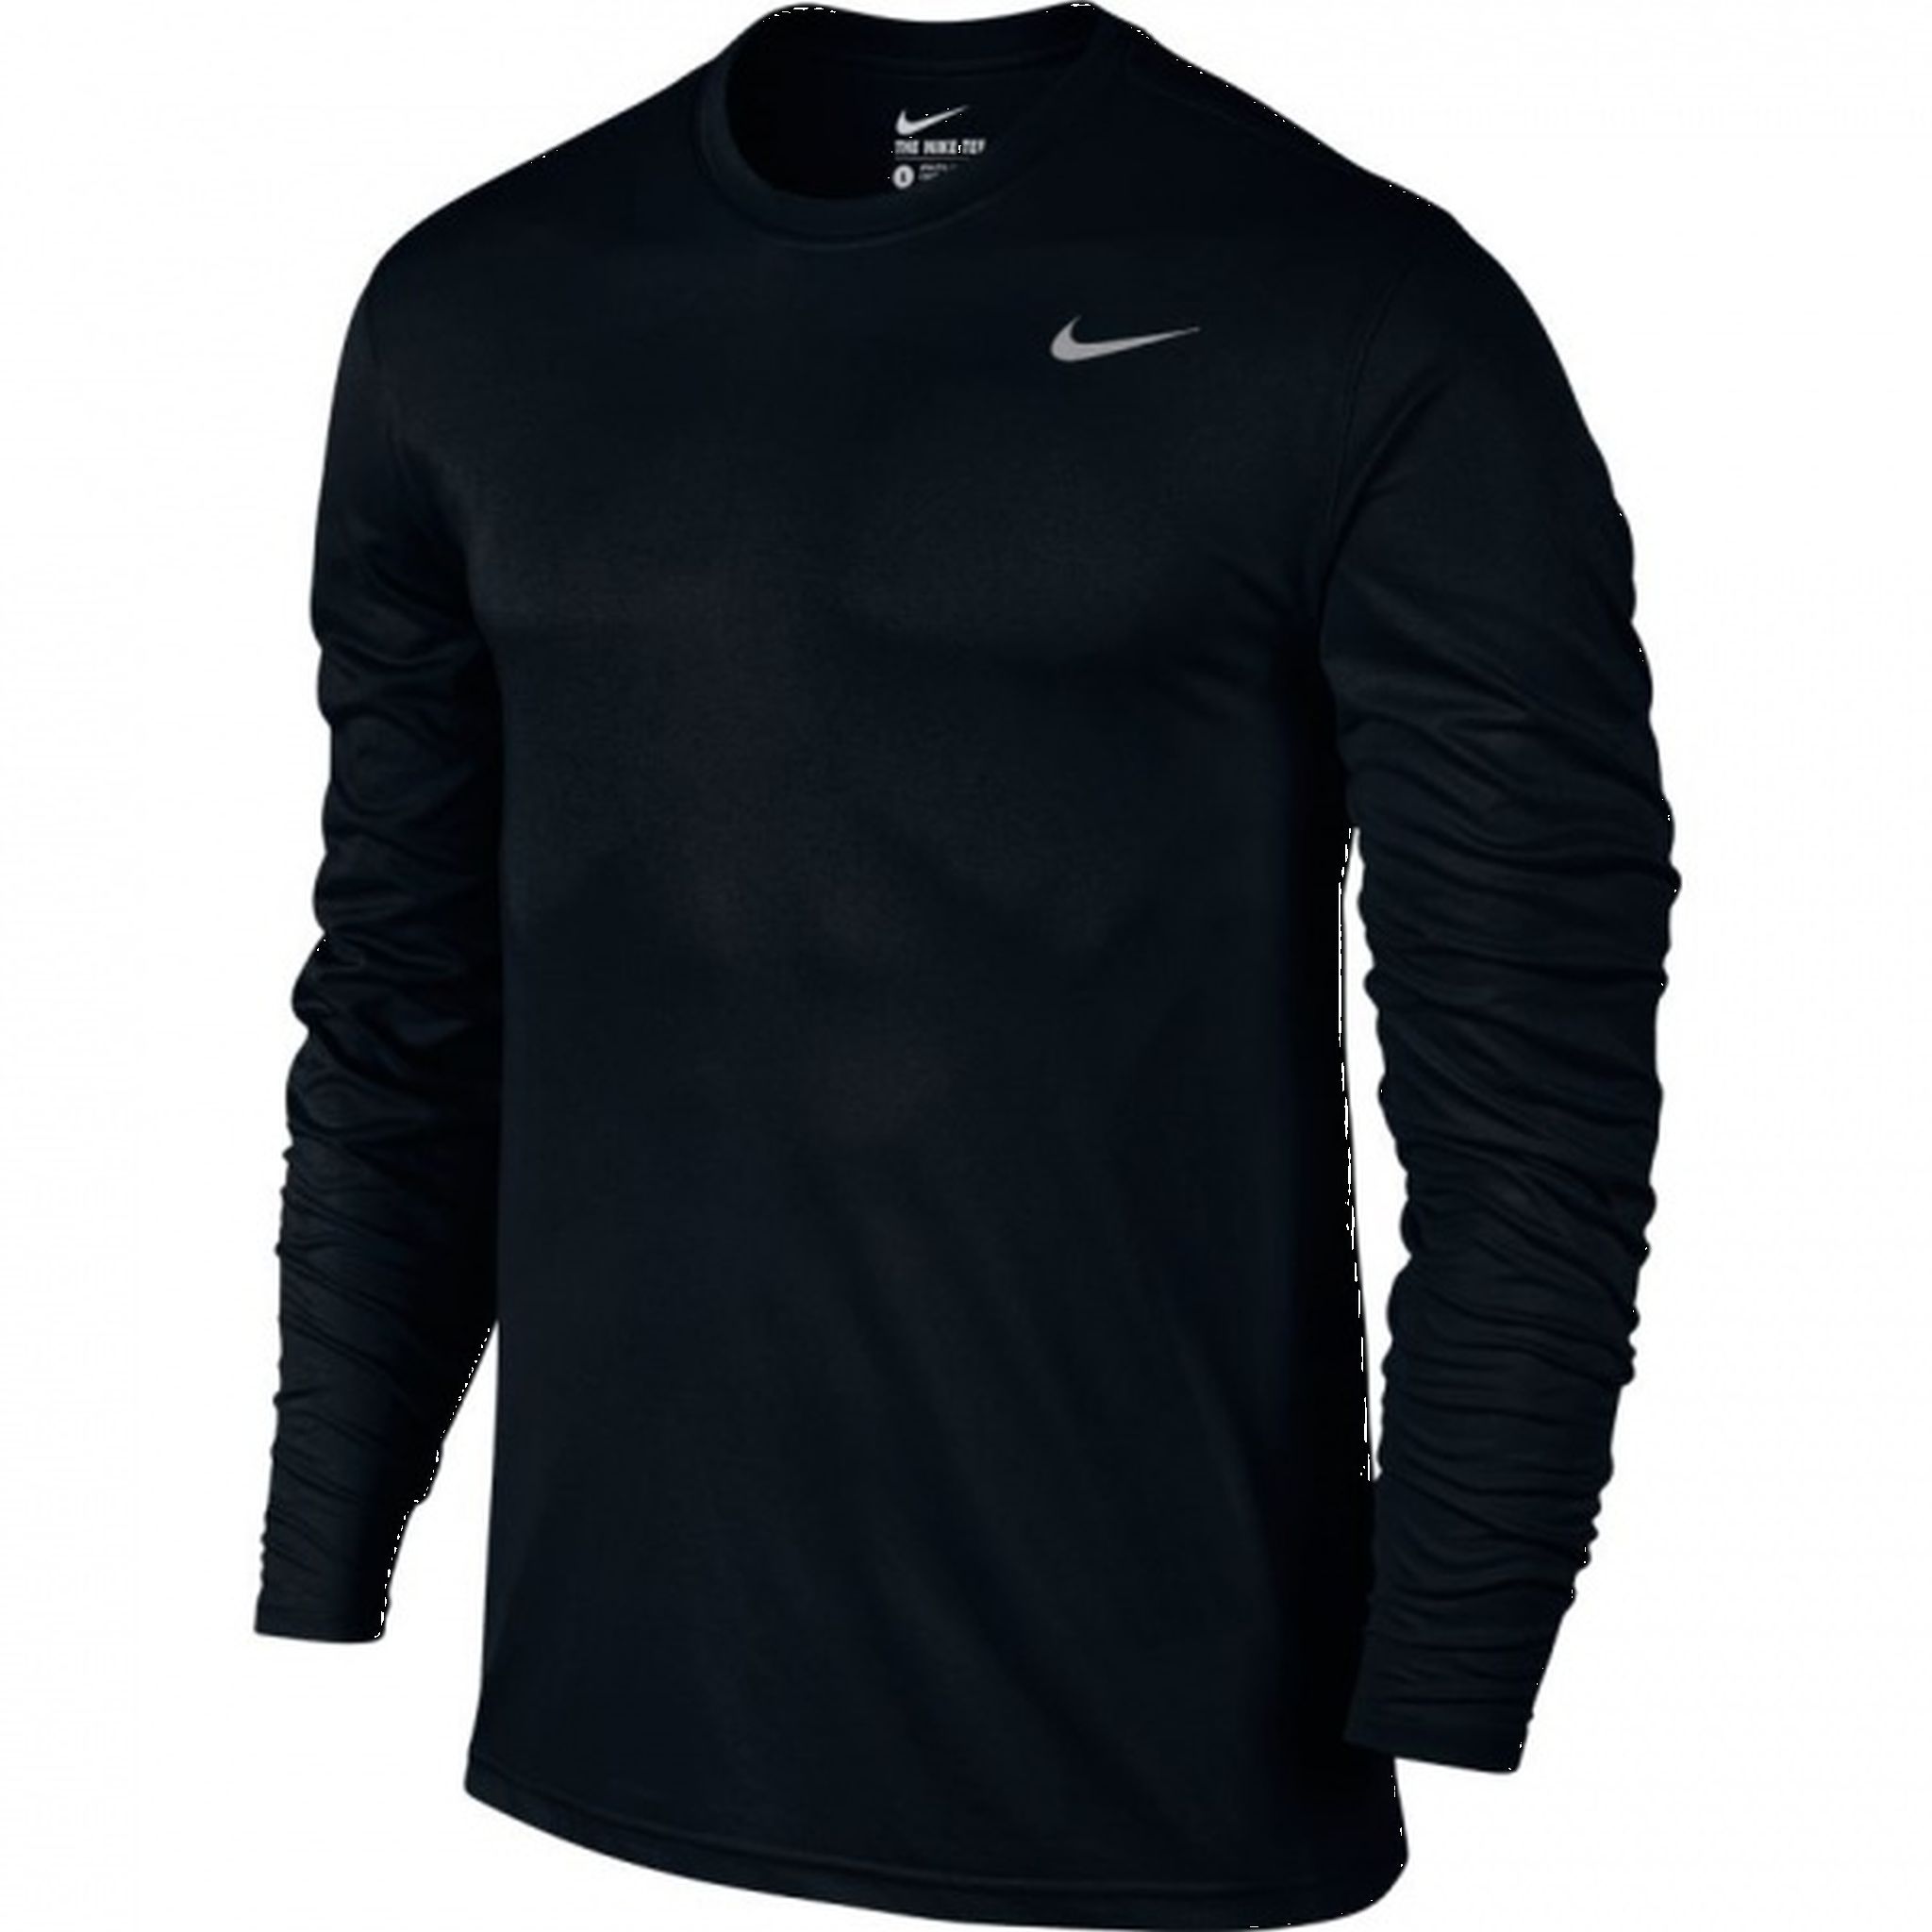 Nike Mens Dry Legend Long Sleeve Training Top